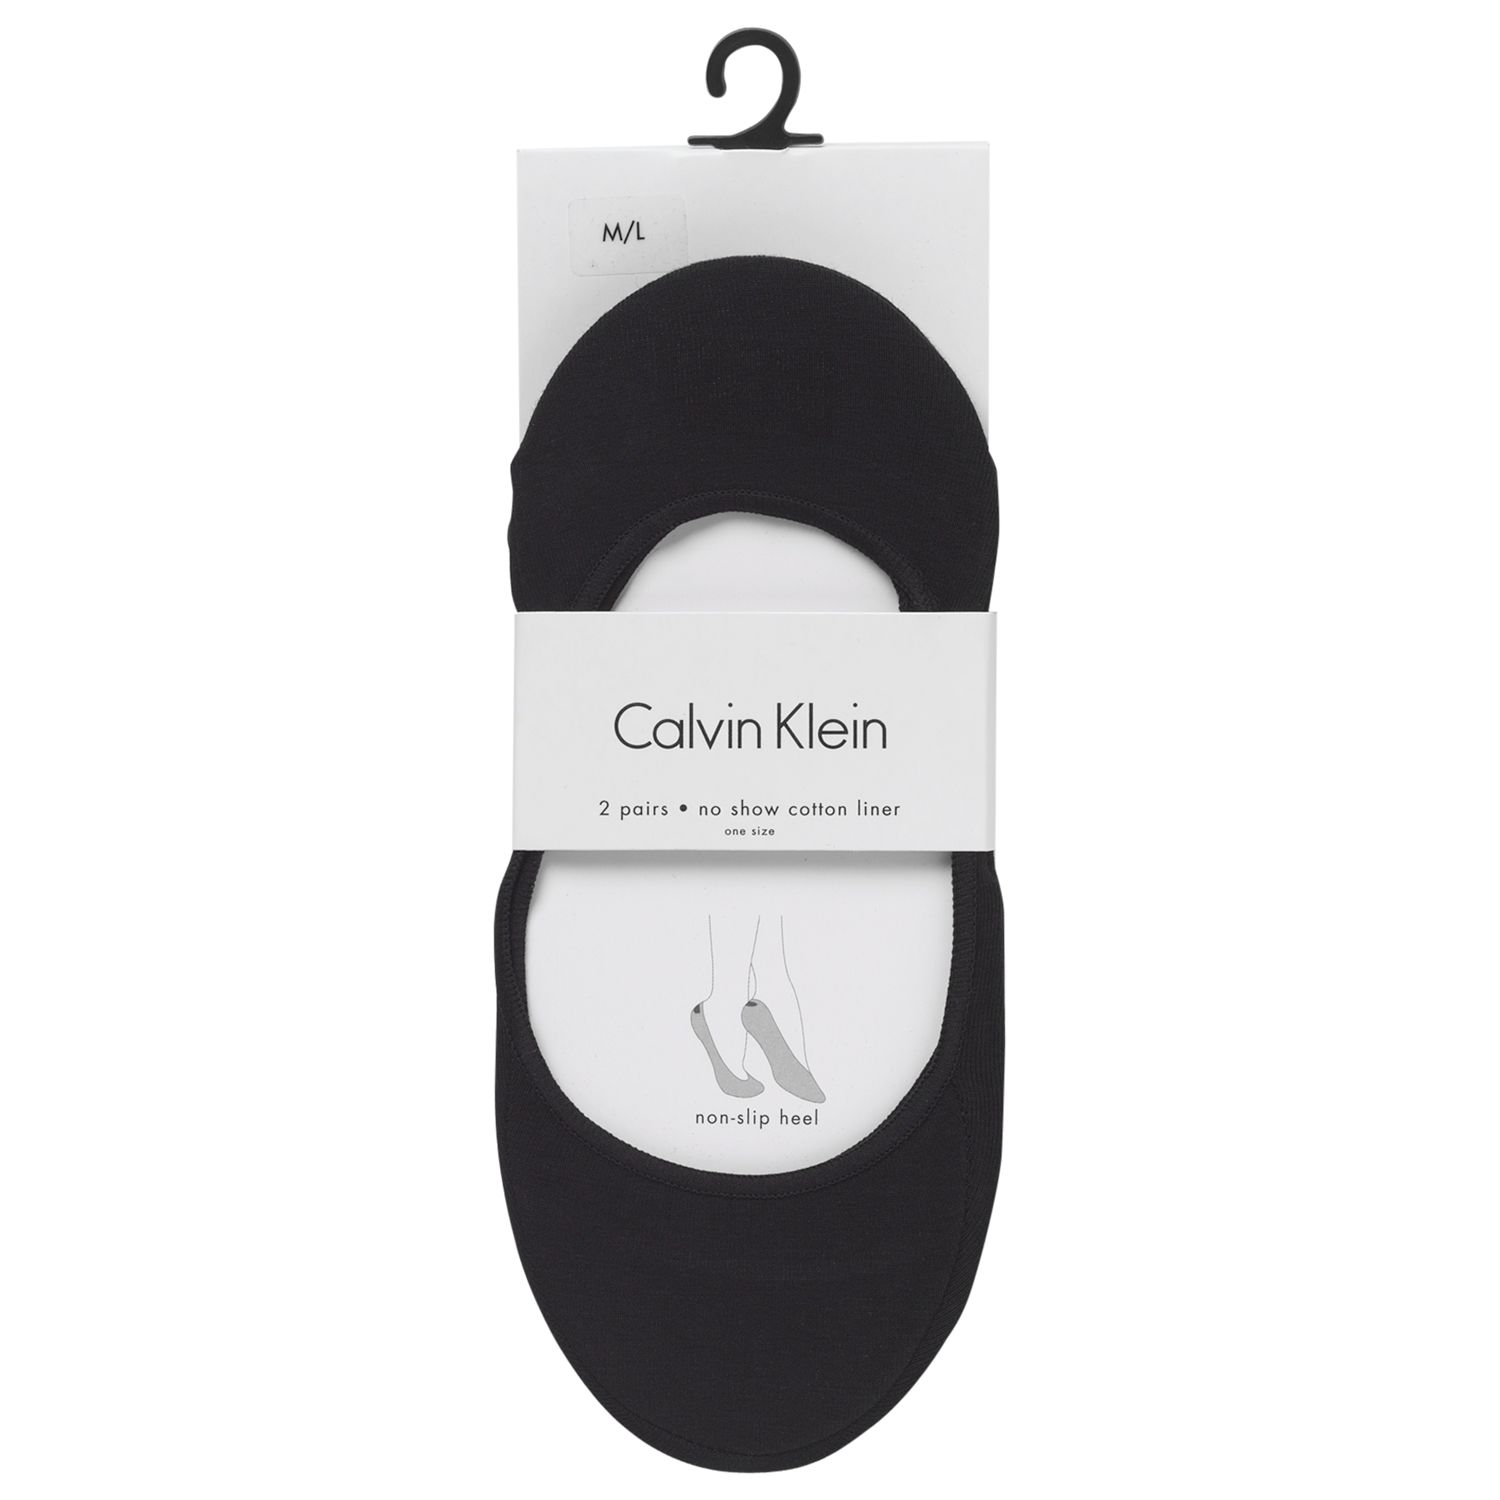 Calvin Klein Ballet Liner Socks, Pack of 2, Black, M-L